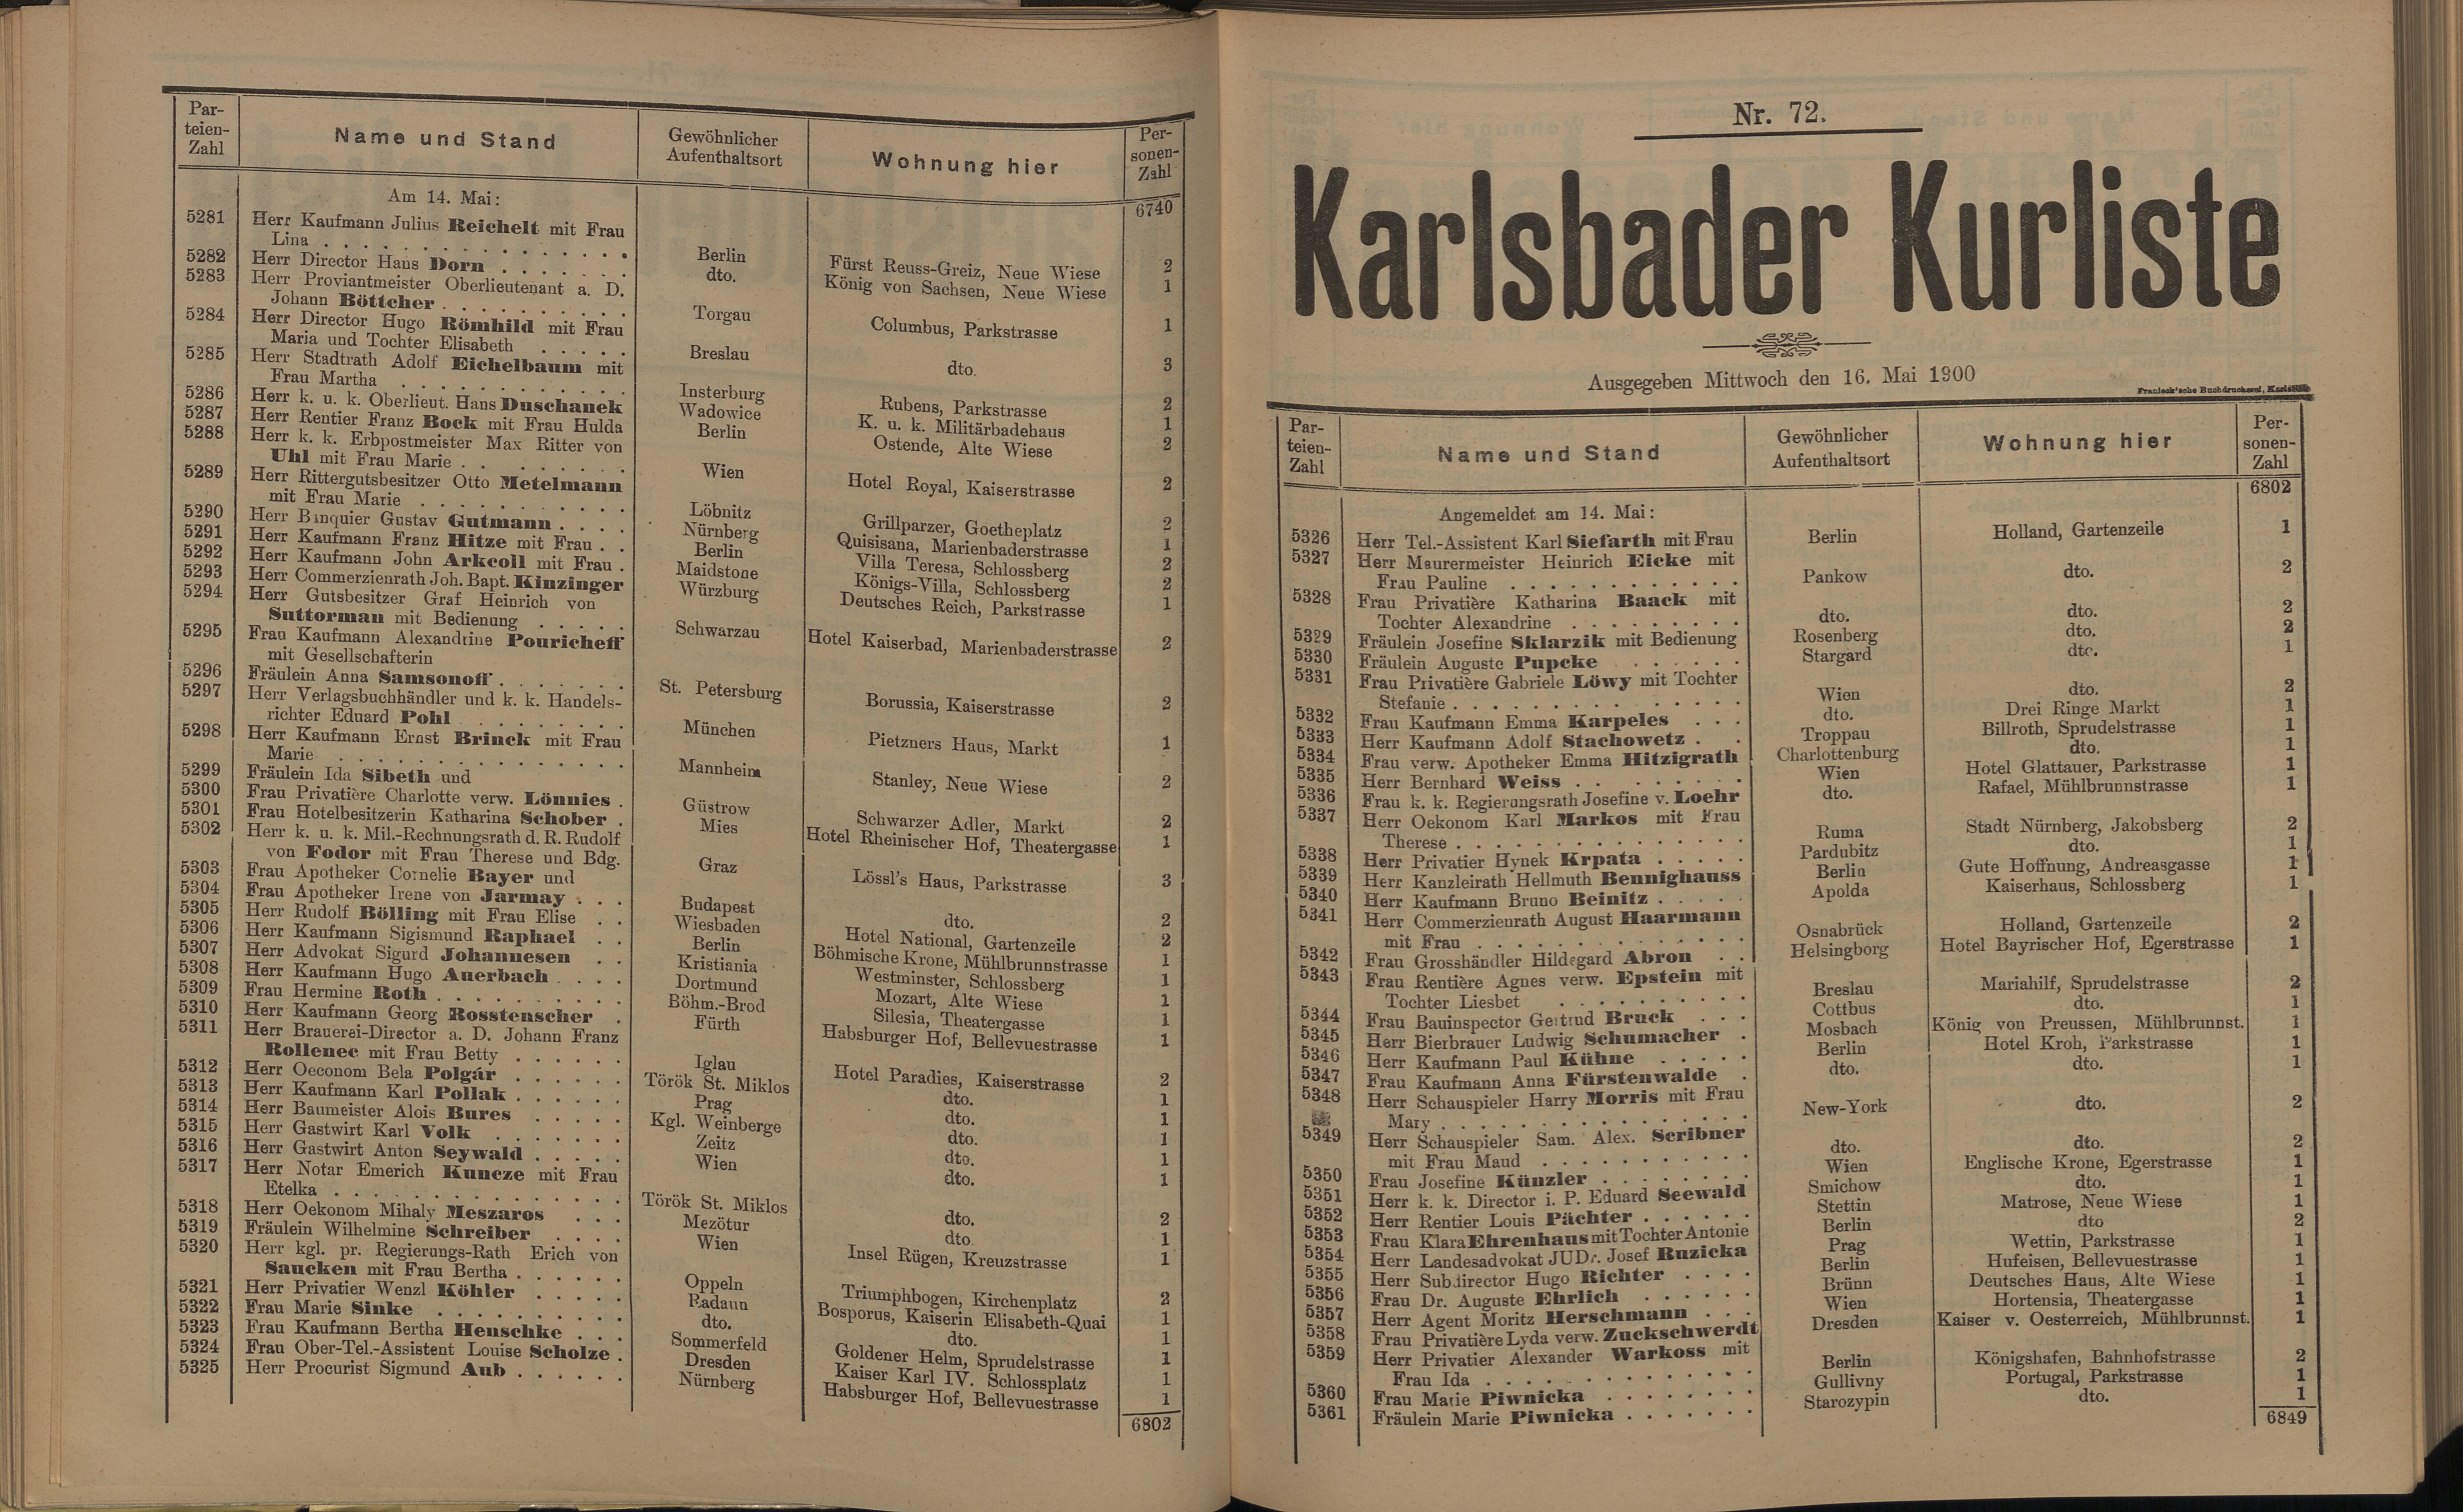 92. soap-kv_knihovna_karlsbader-kurliste-1900_0930